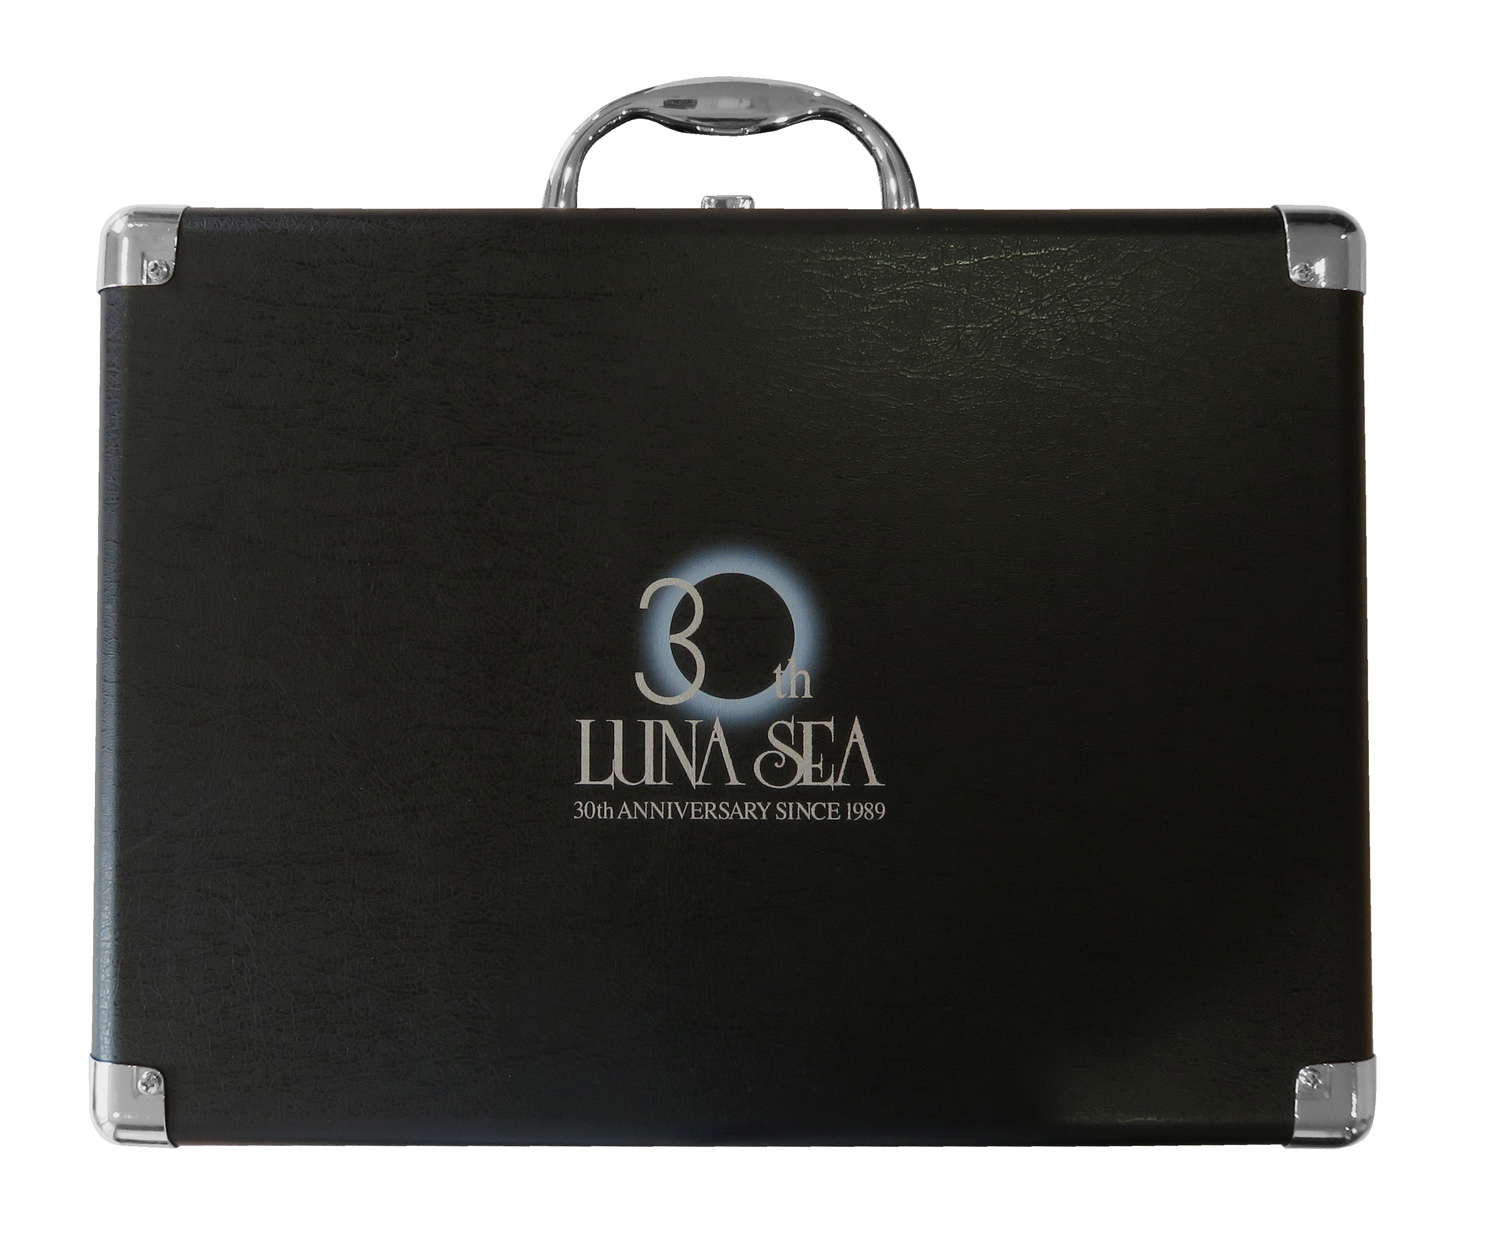 LUNA SEA 結成30周年記念ポータブルレコードプレーヤーを限定発売